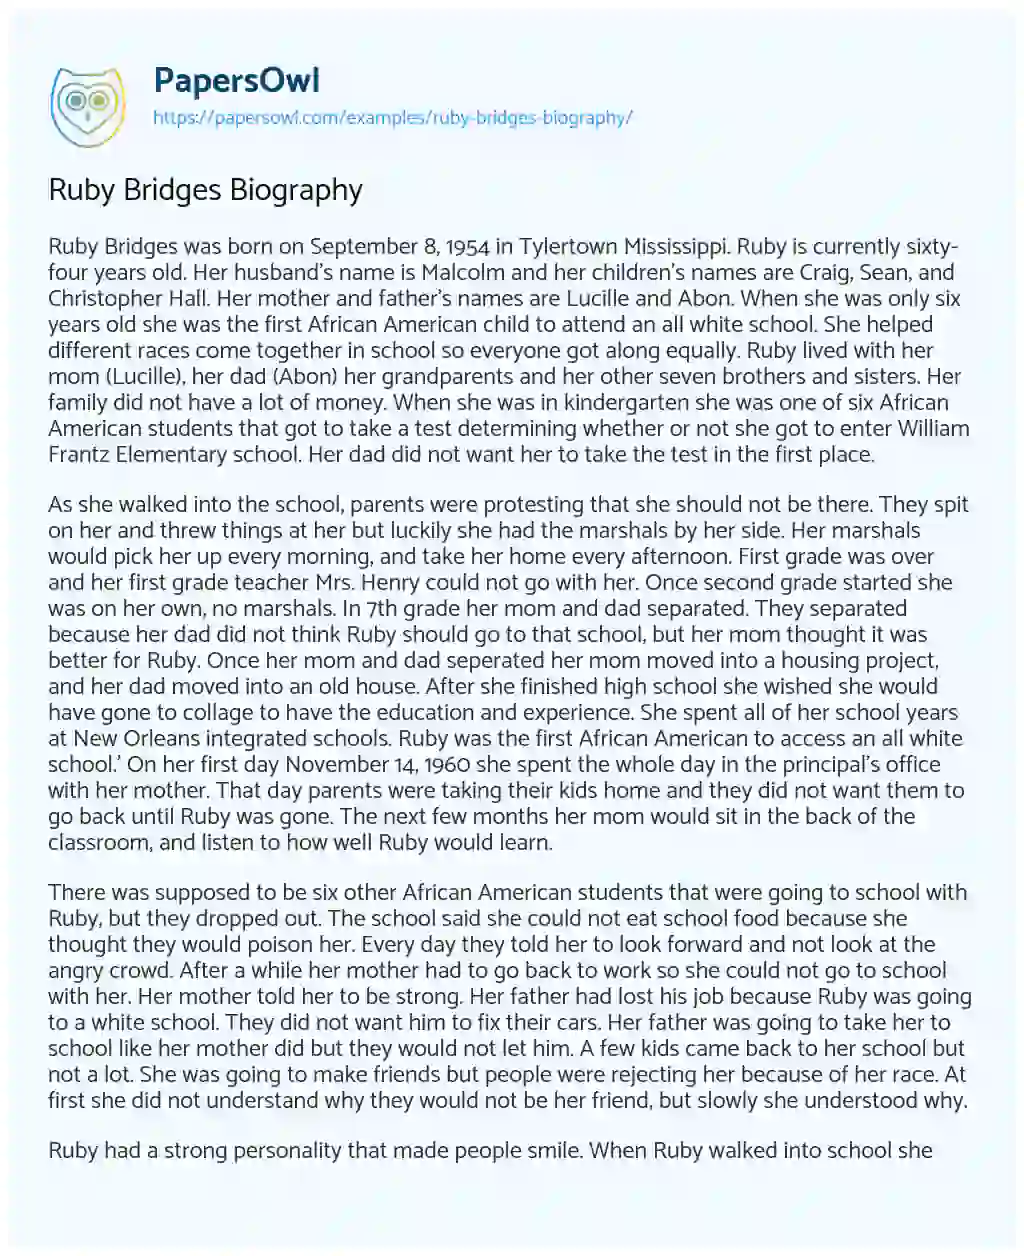 Essay on Ruby Bridges Biography